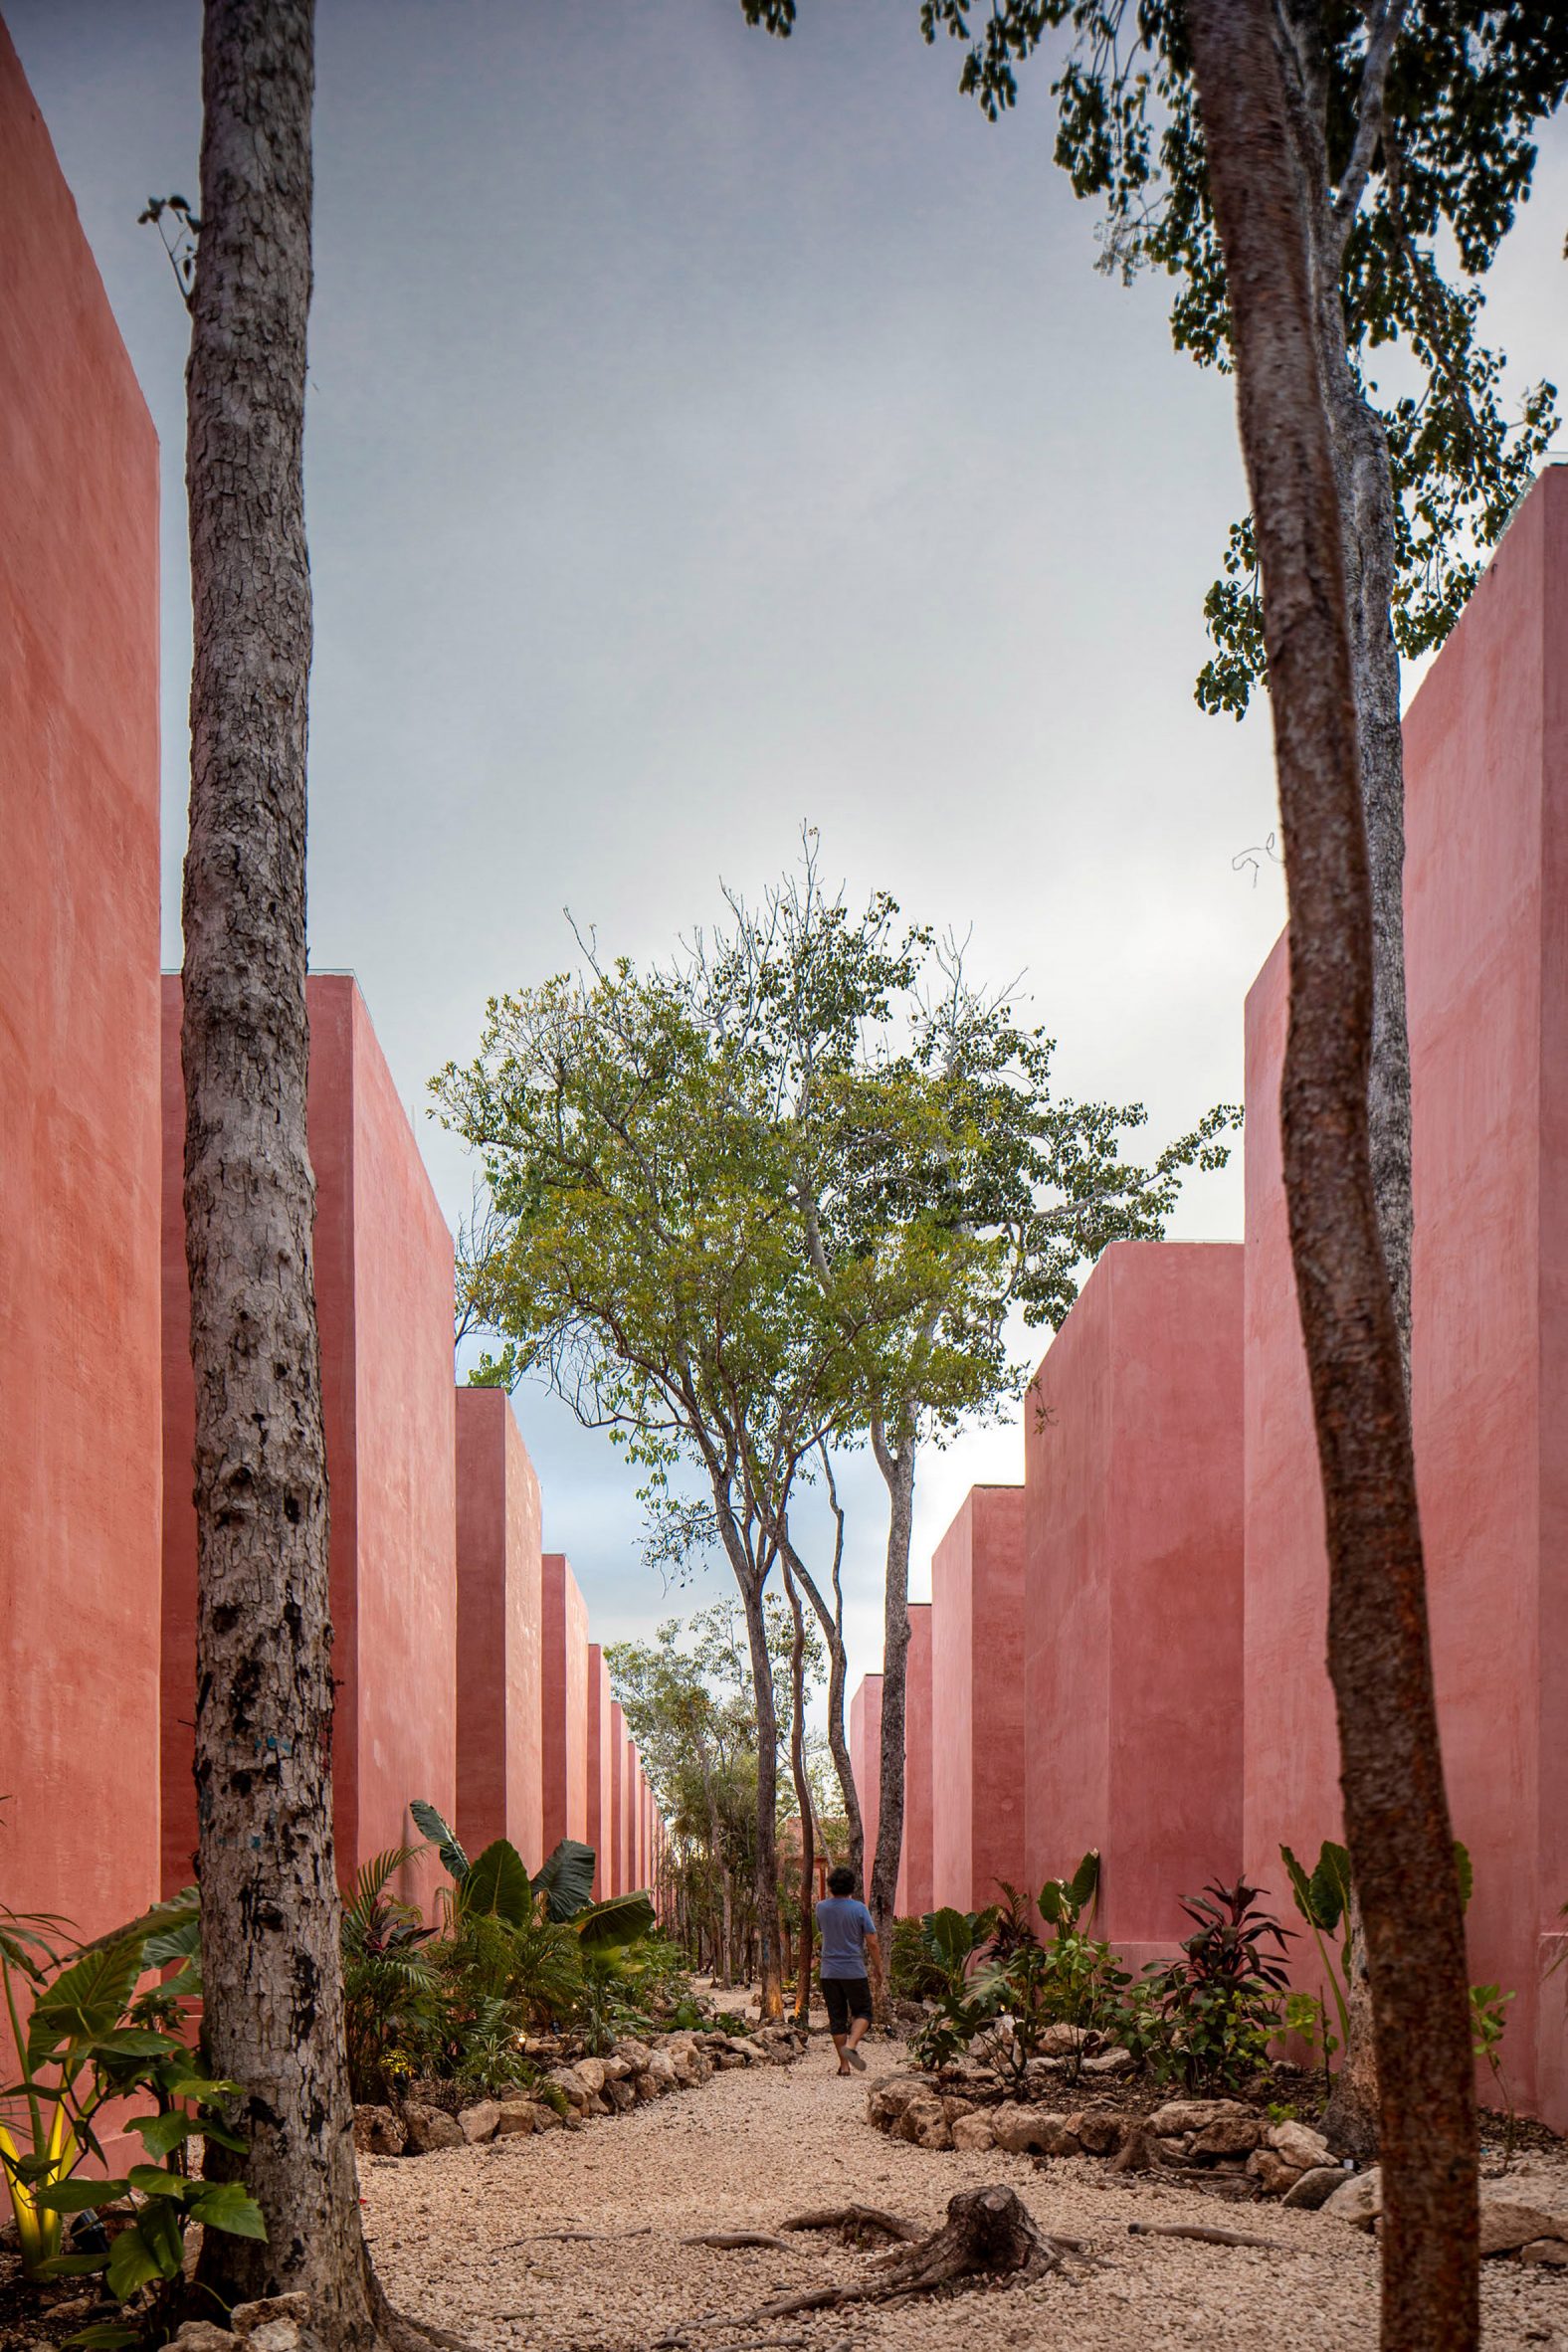 Coyote Arquitectura designs repetitive red housing in Tulum